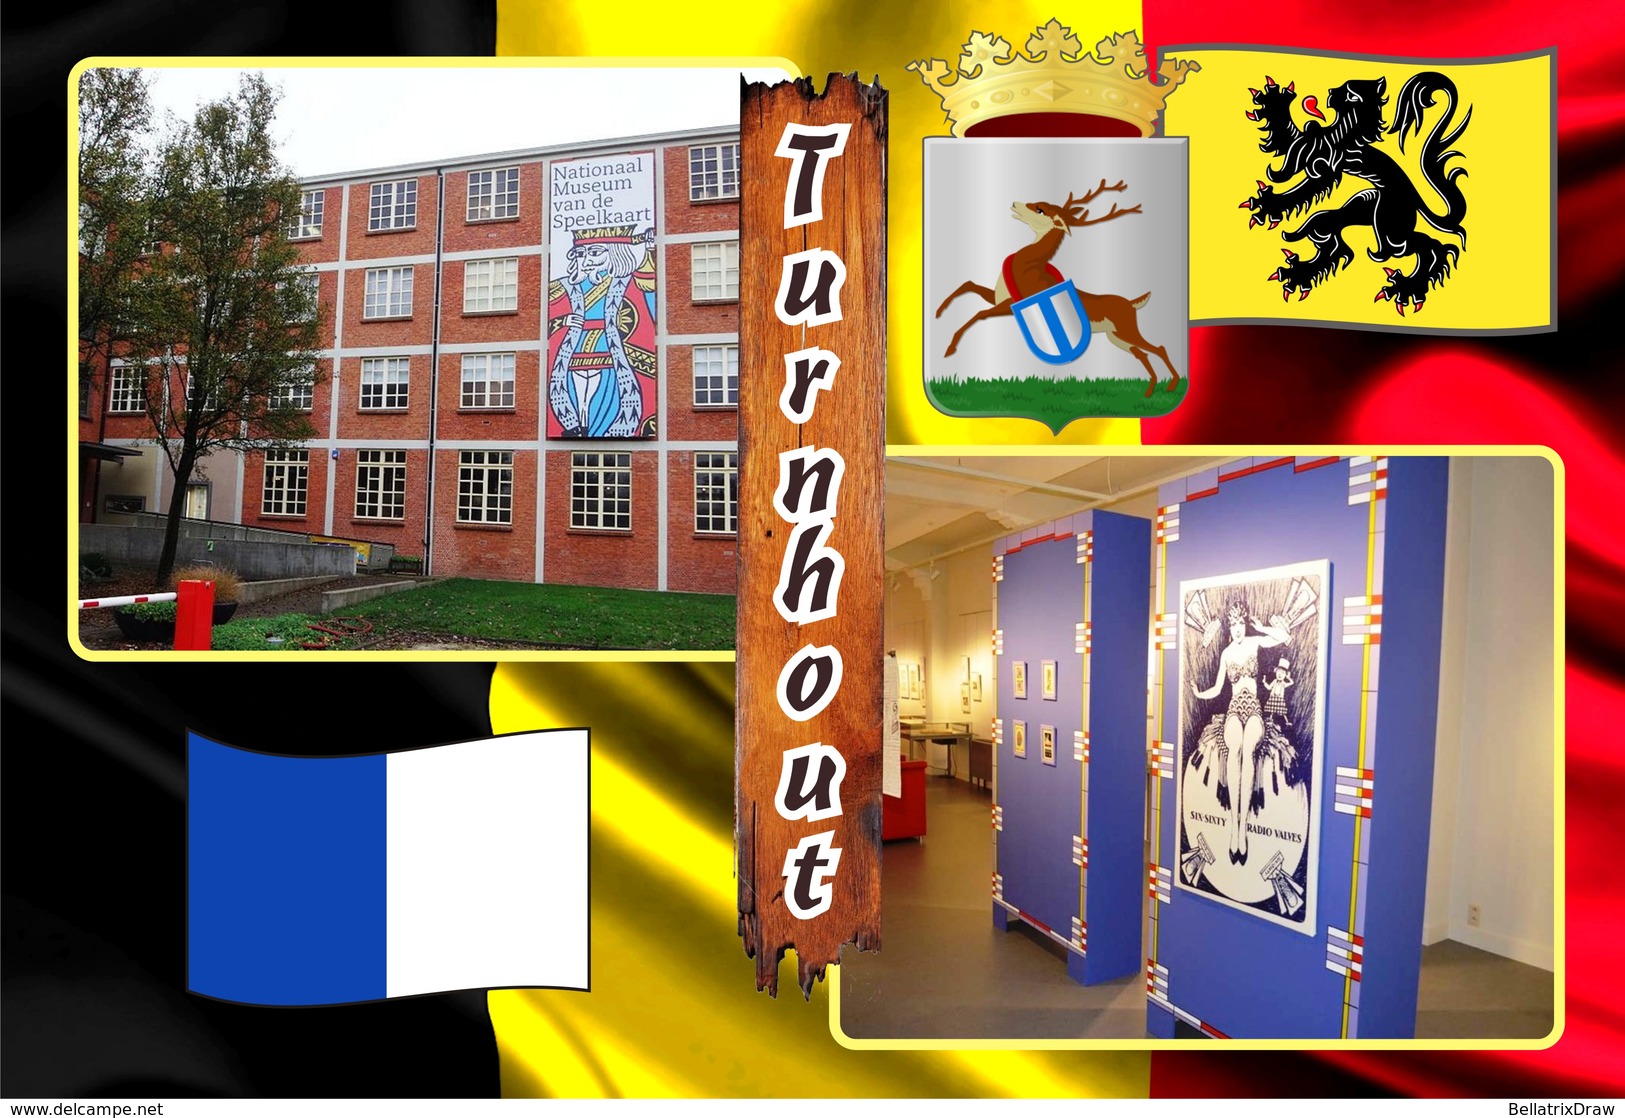 Postcards, REPRODUCTION, Municipalities of Belgium, Turnhout, duplex 92 to 139 - set of 48 pcs.